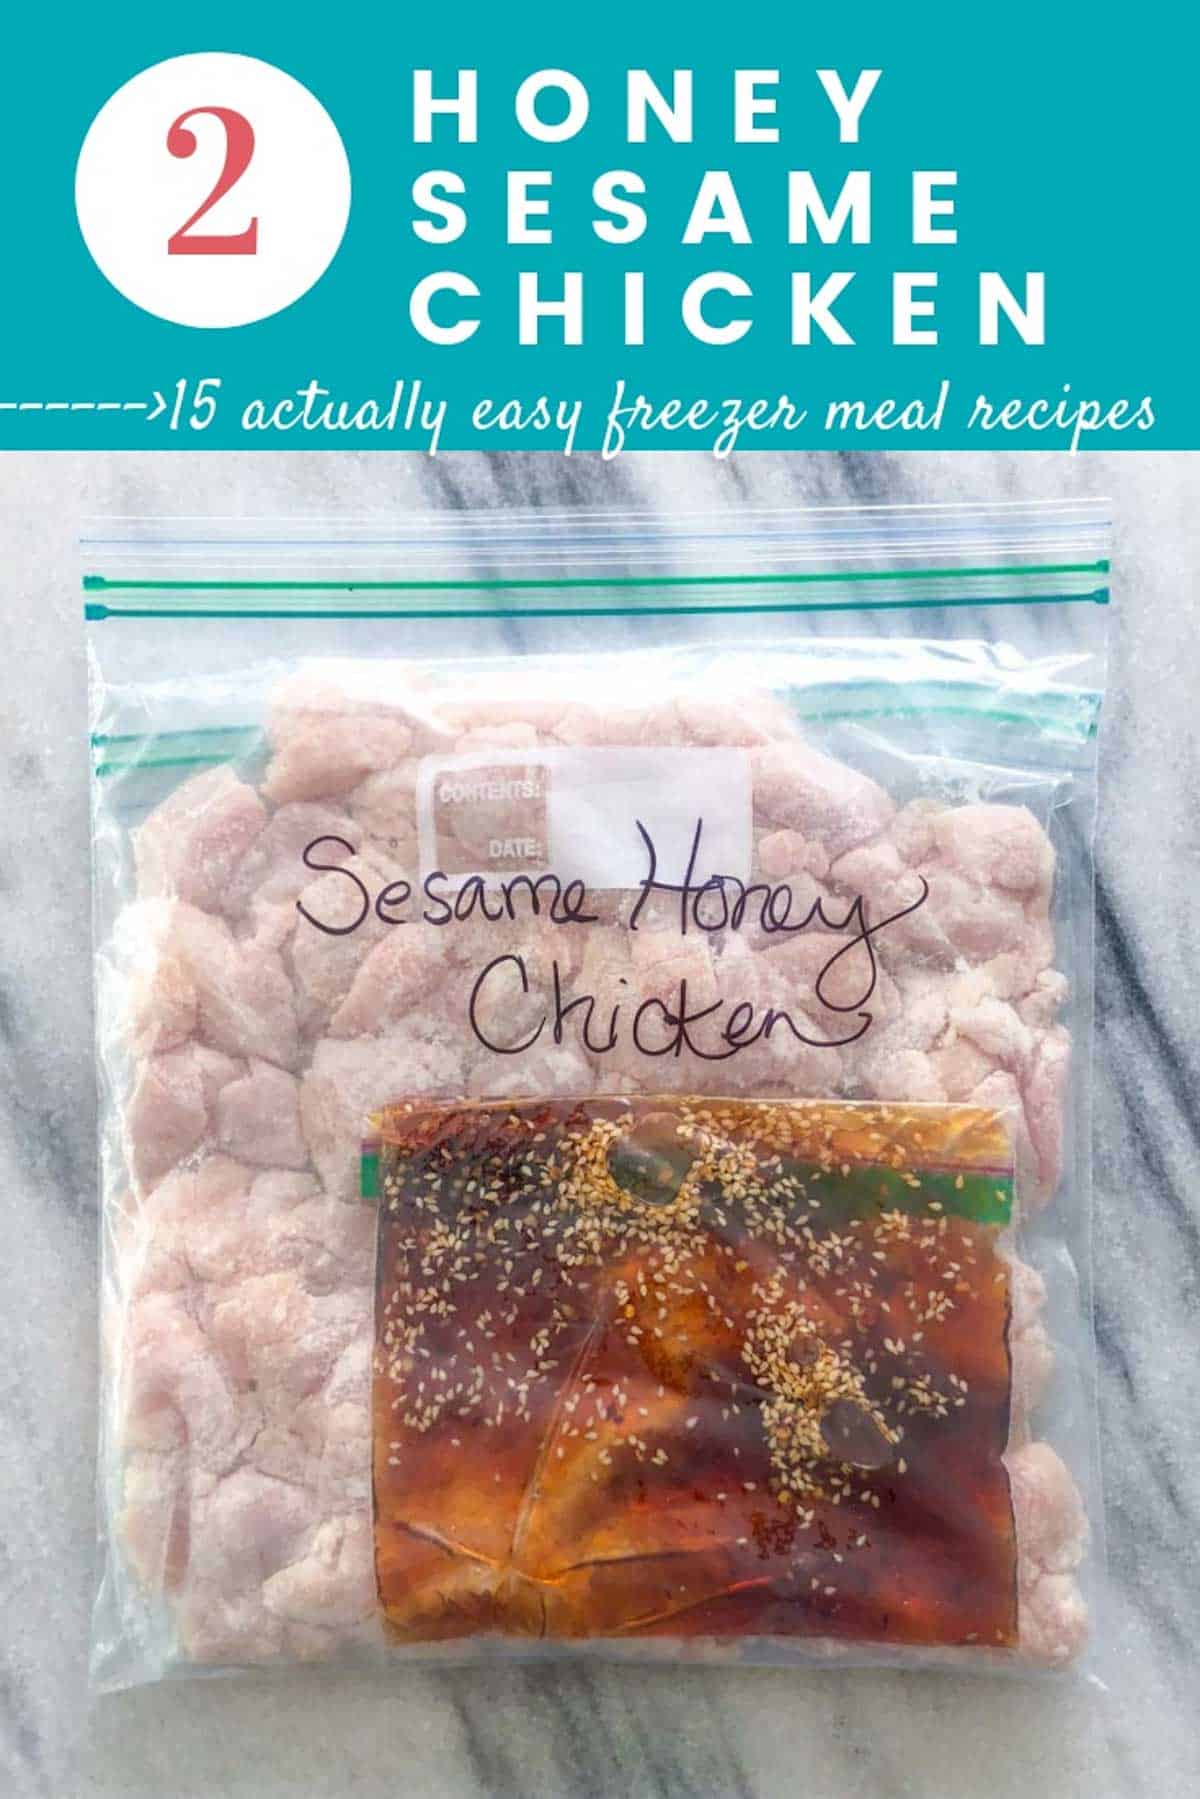 Easy freezer meals: Honey Sesame Chicken in a freezer bag